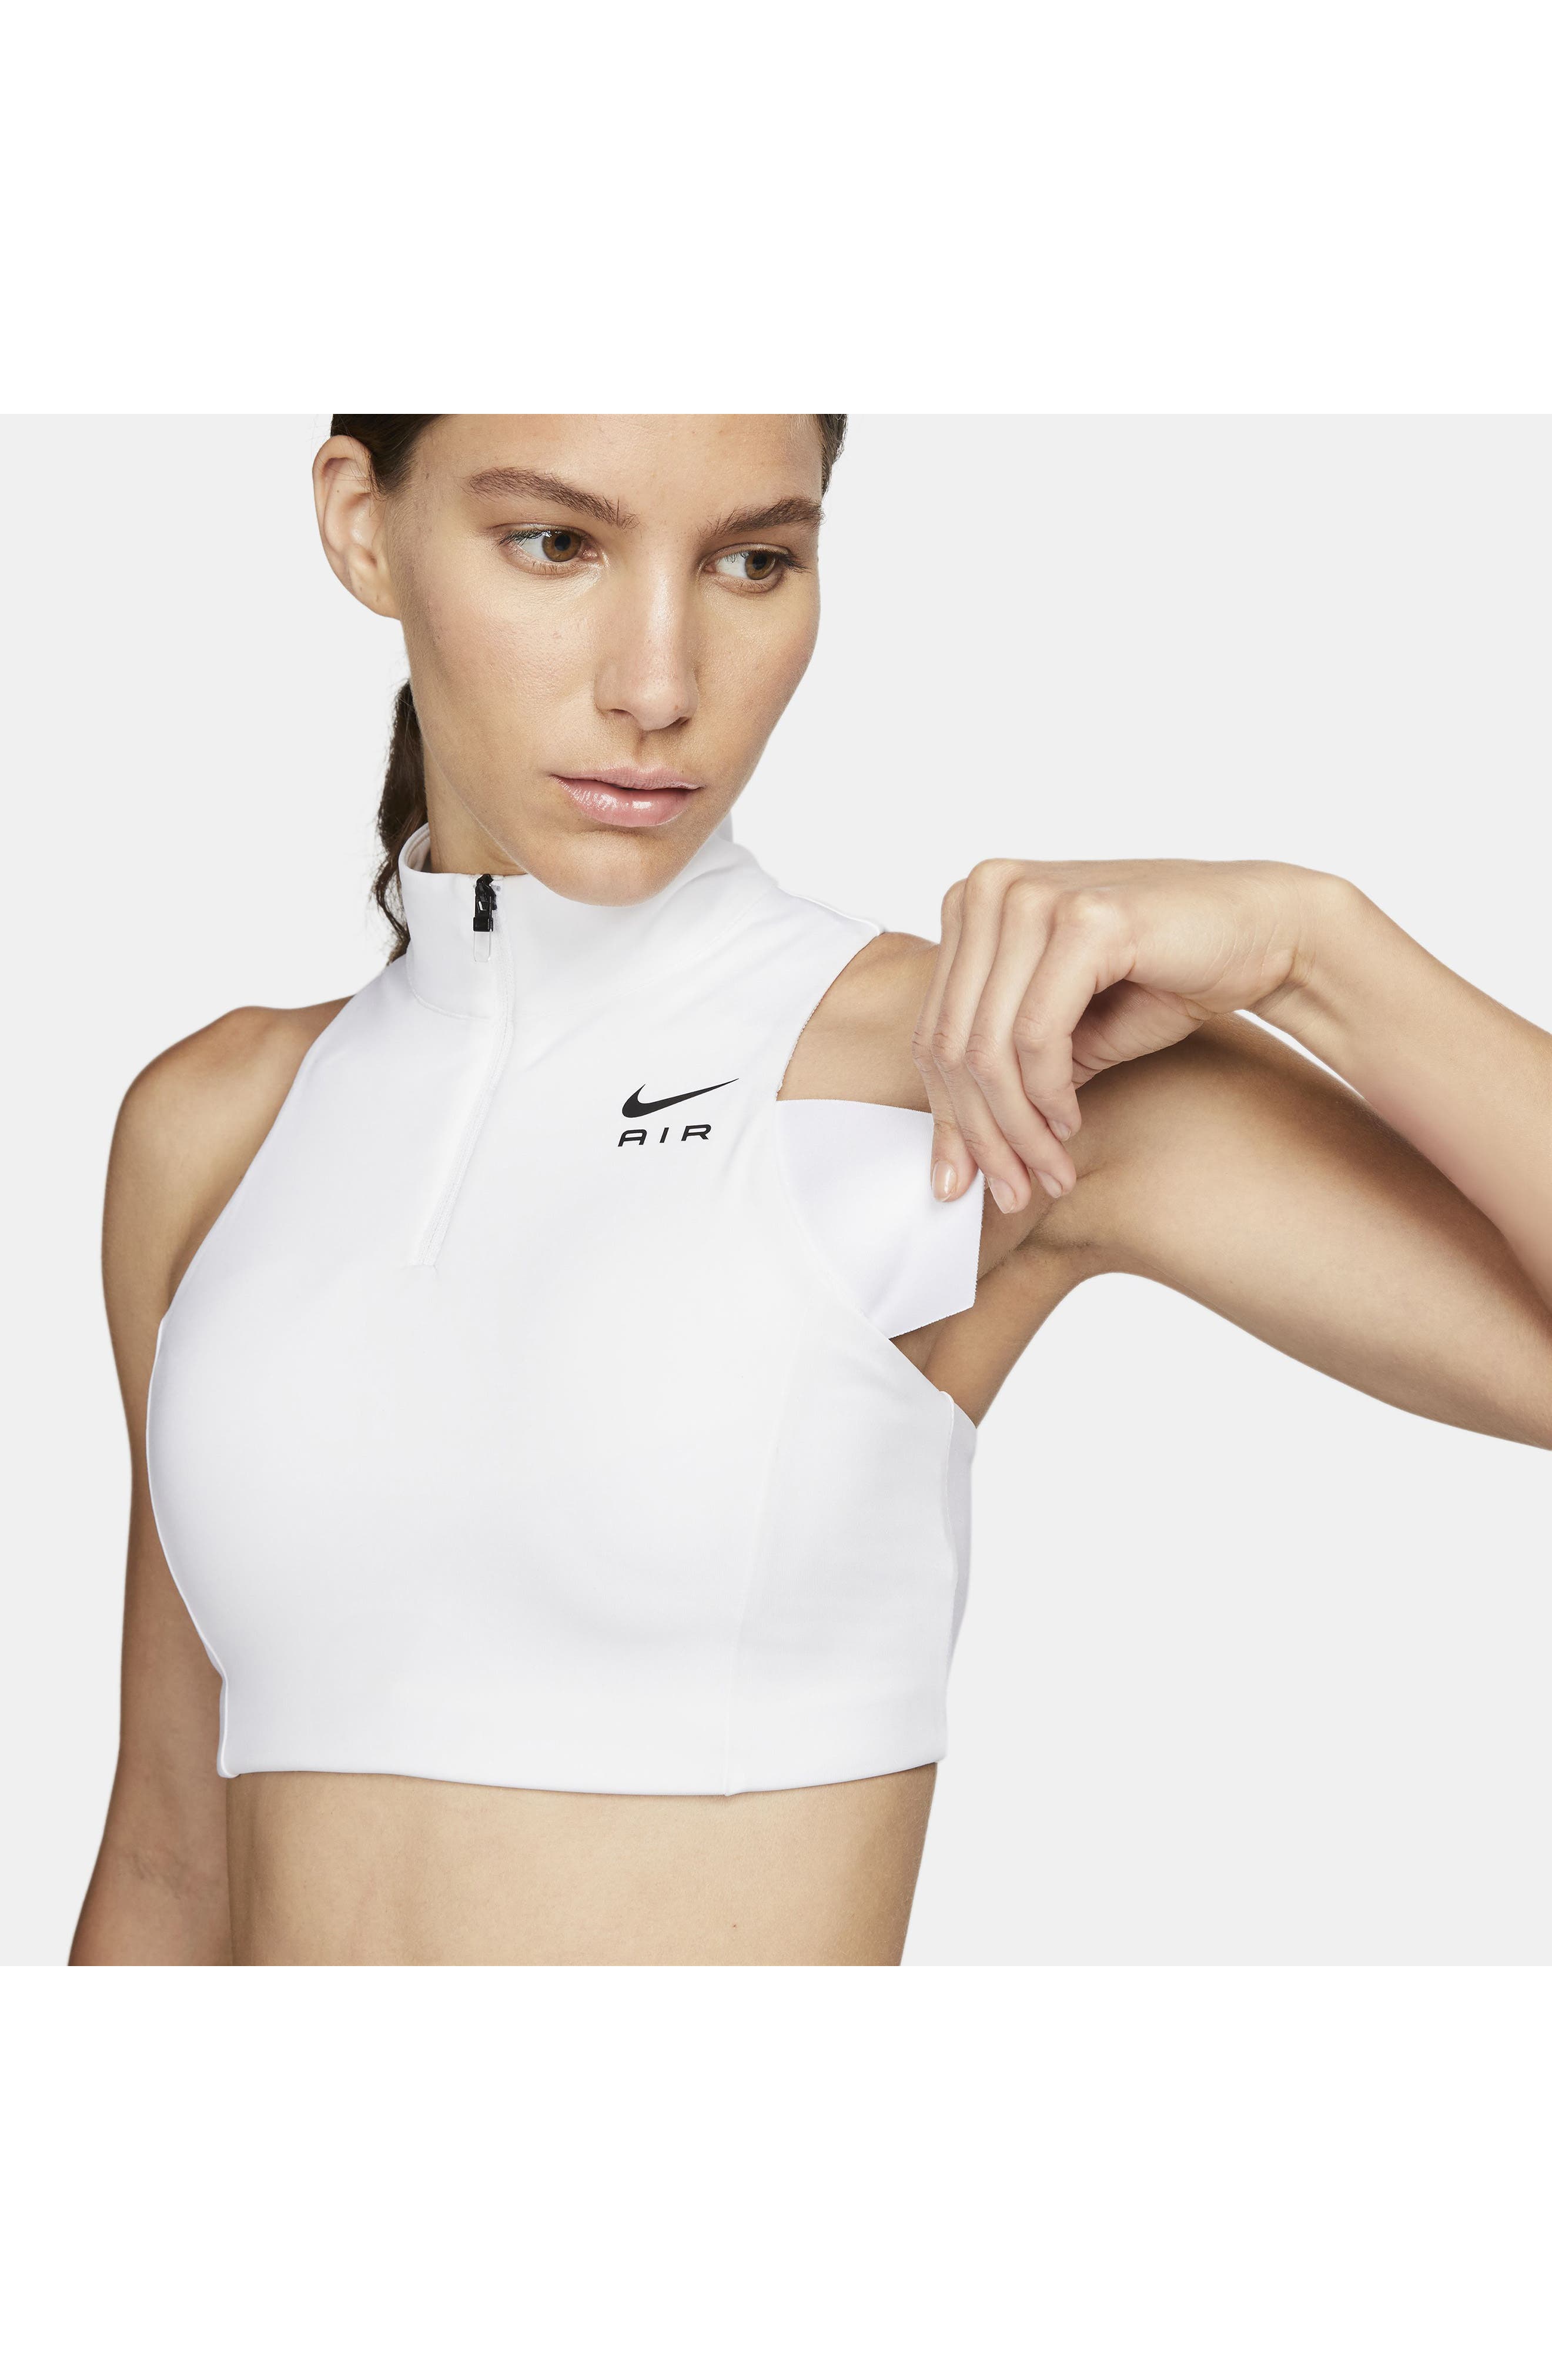 NIKE TRAINING Nike INDY - Sports Bra - Women's - fireberry/white